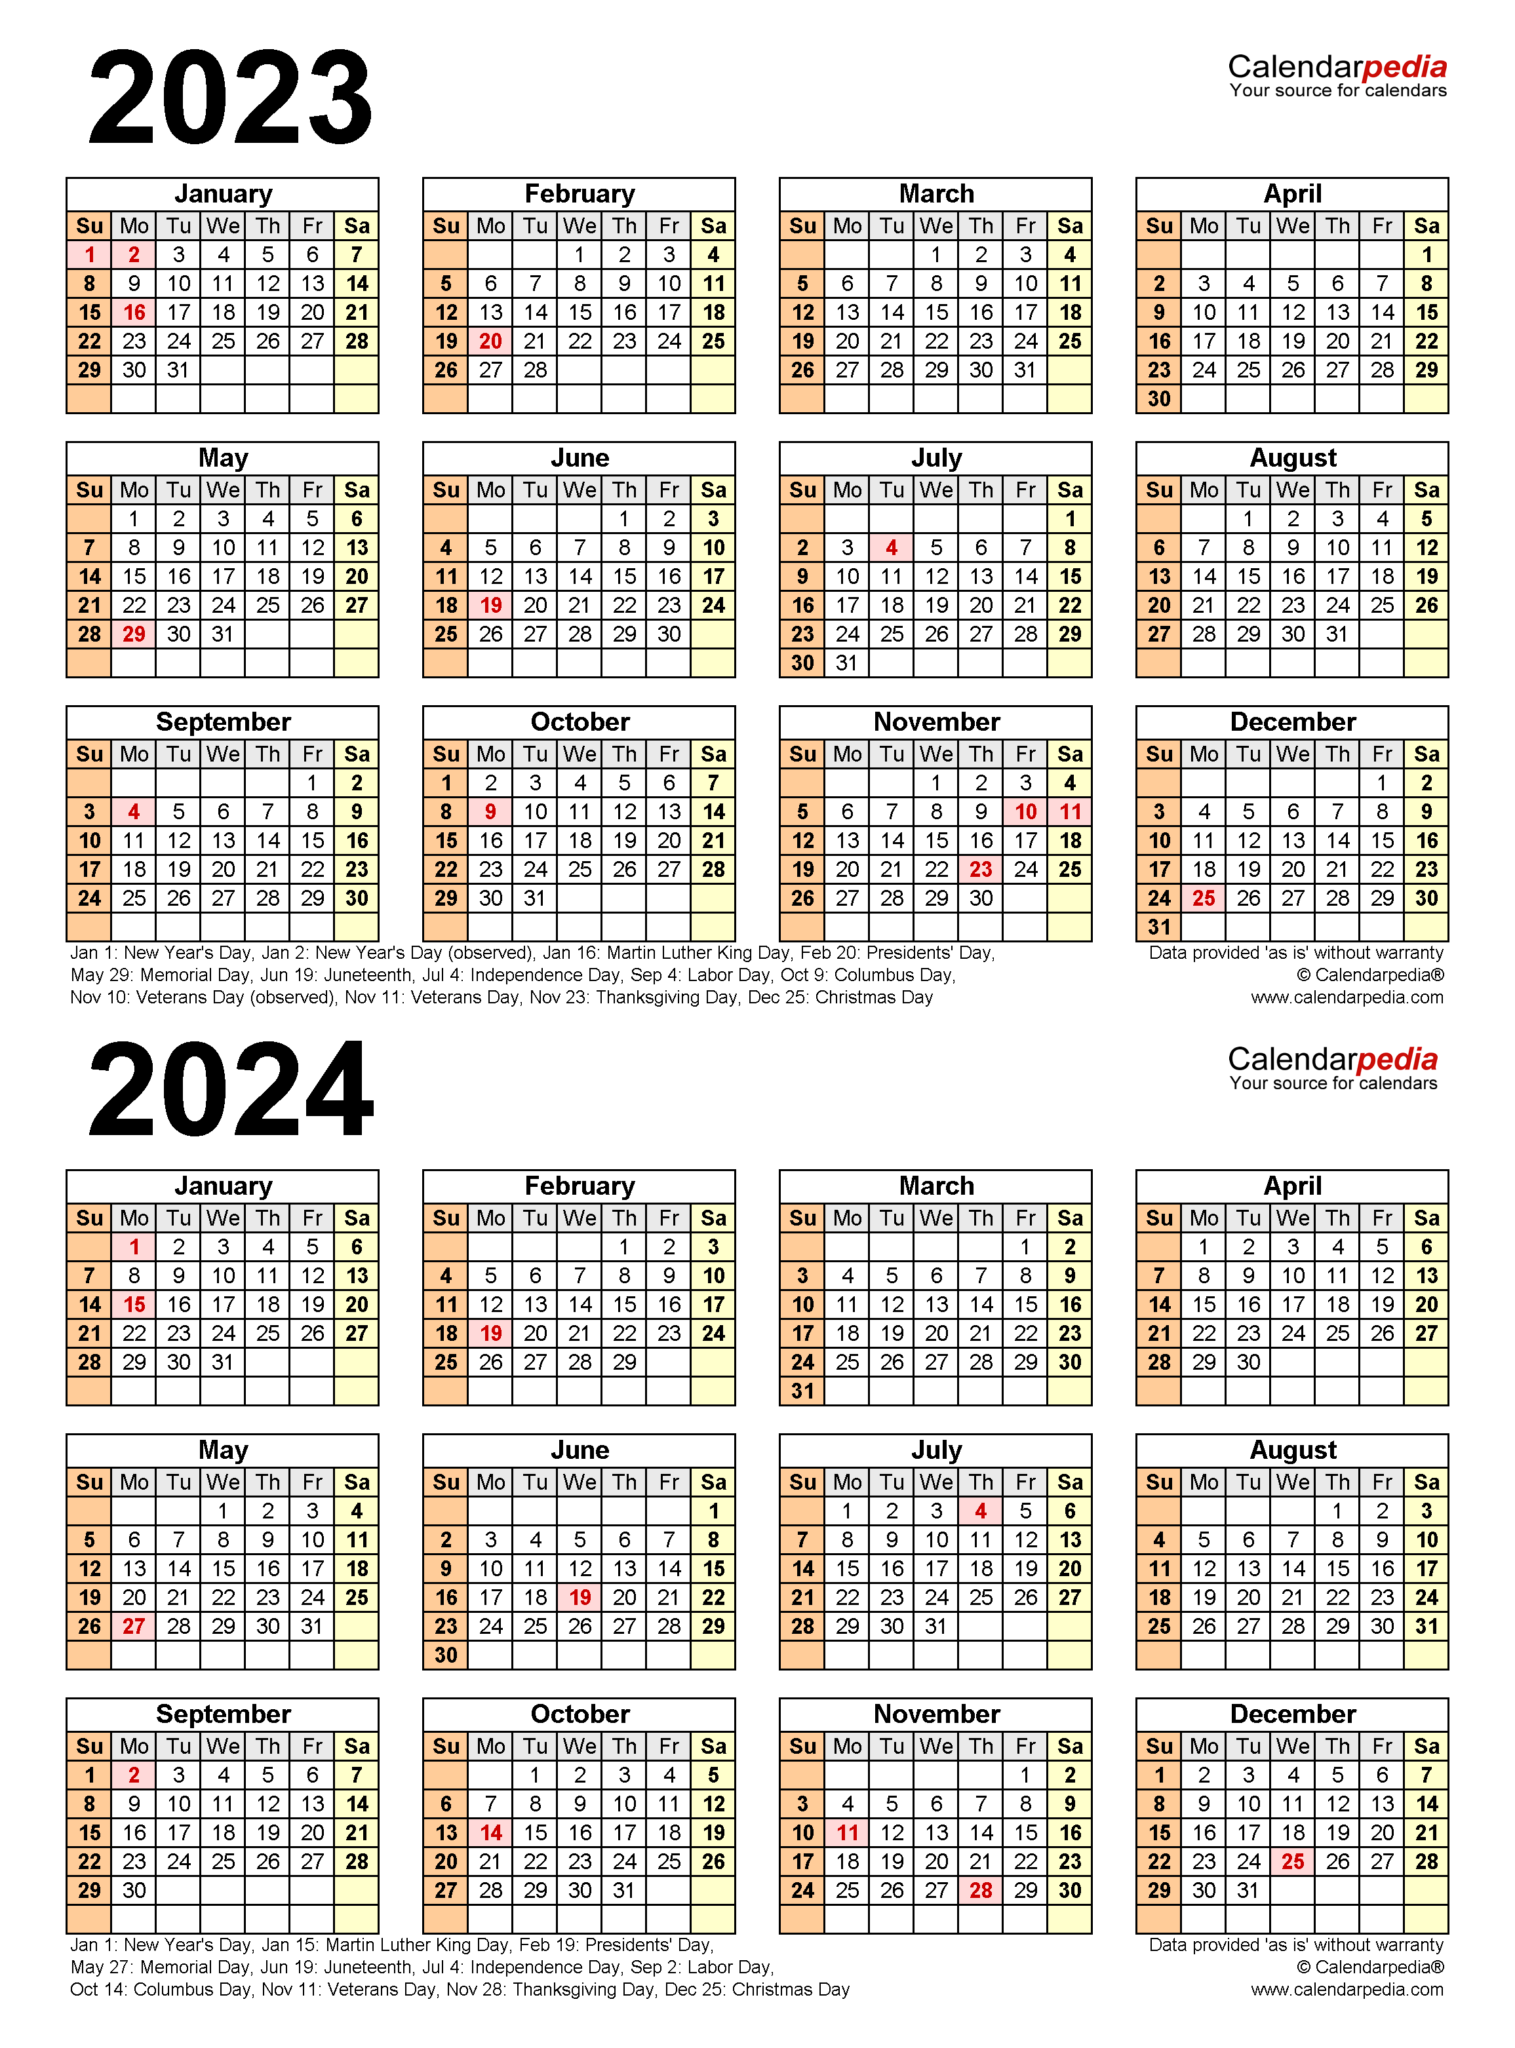 Incredible Blinn Academic Calendar 2023 2024 Images Calendar Ideas 2023